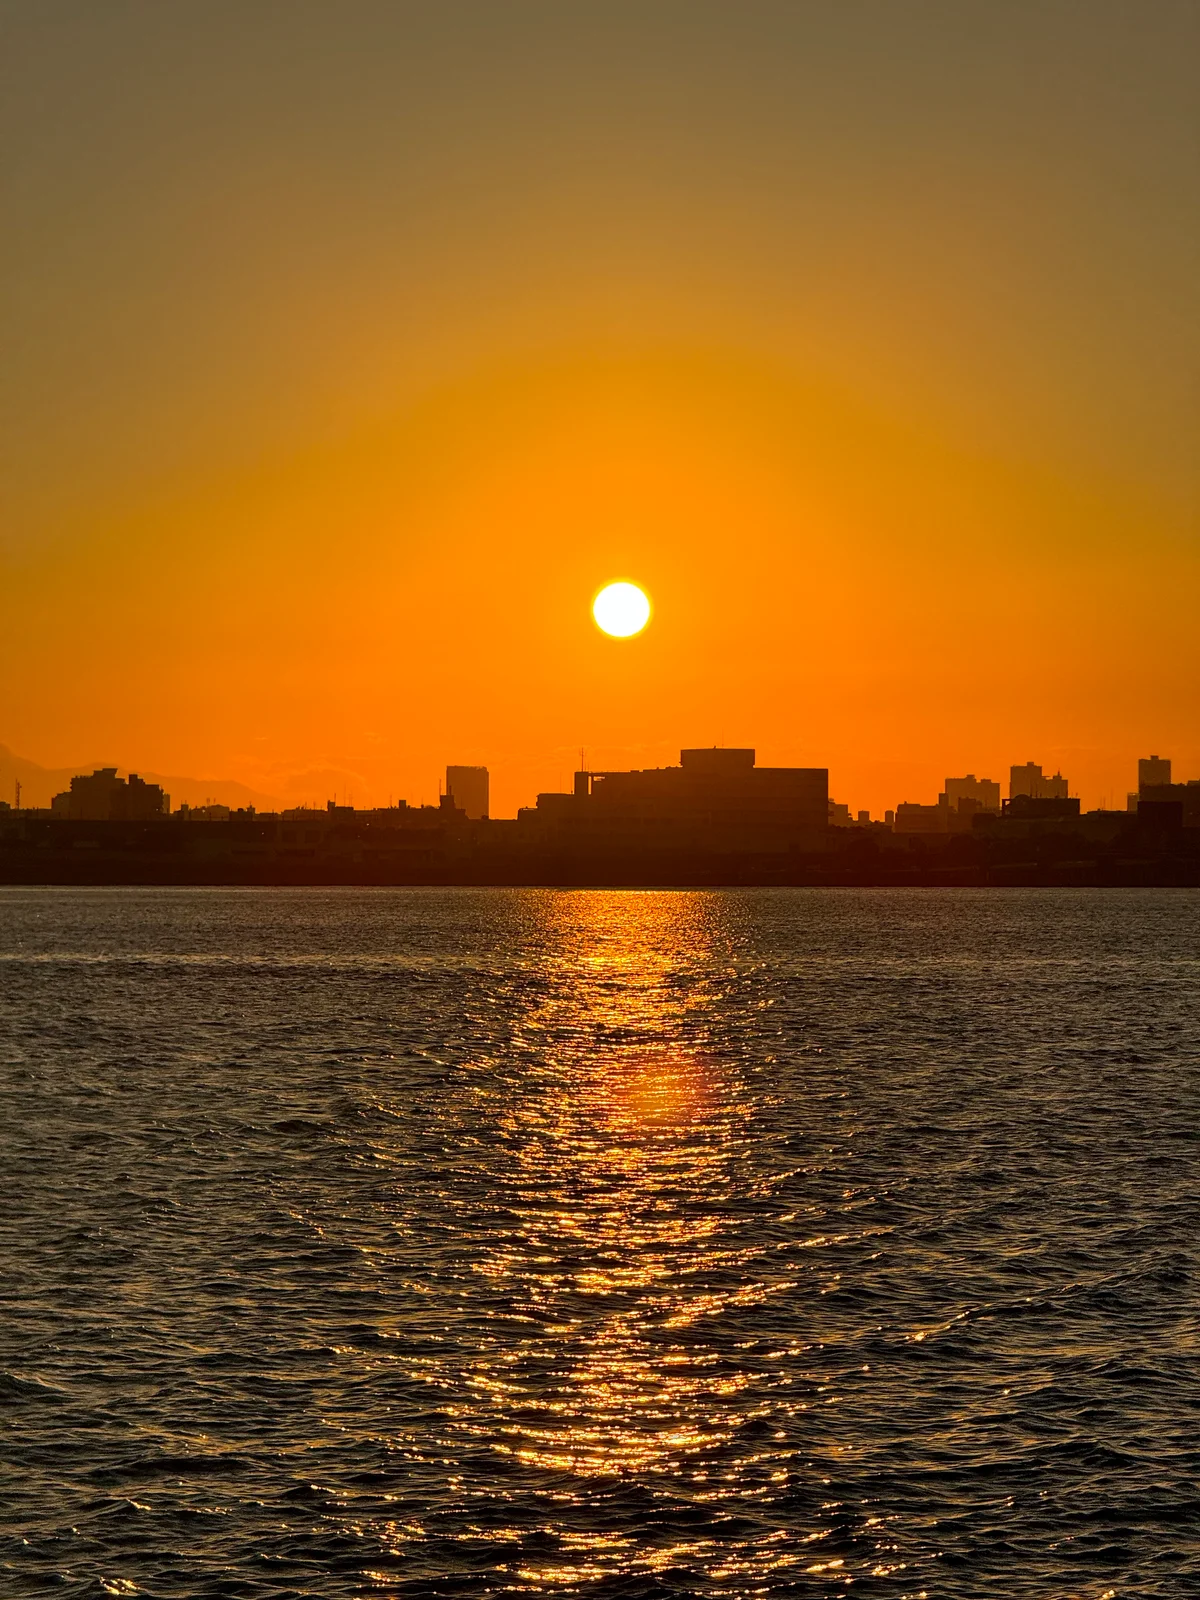 iPhone 15 Pro Maxの5倍望遠ズームで撮影した夕日の写真